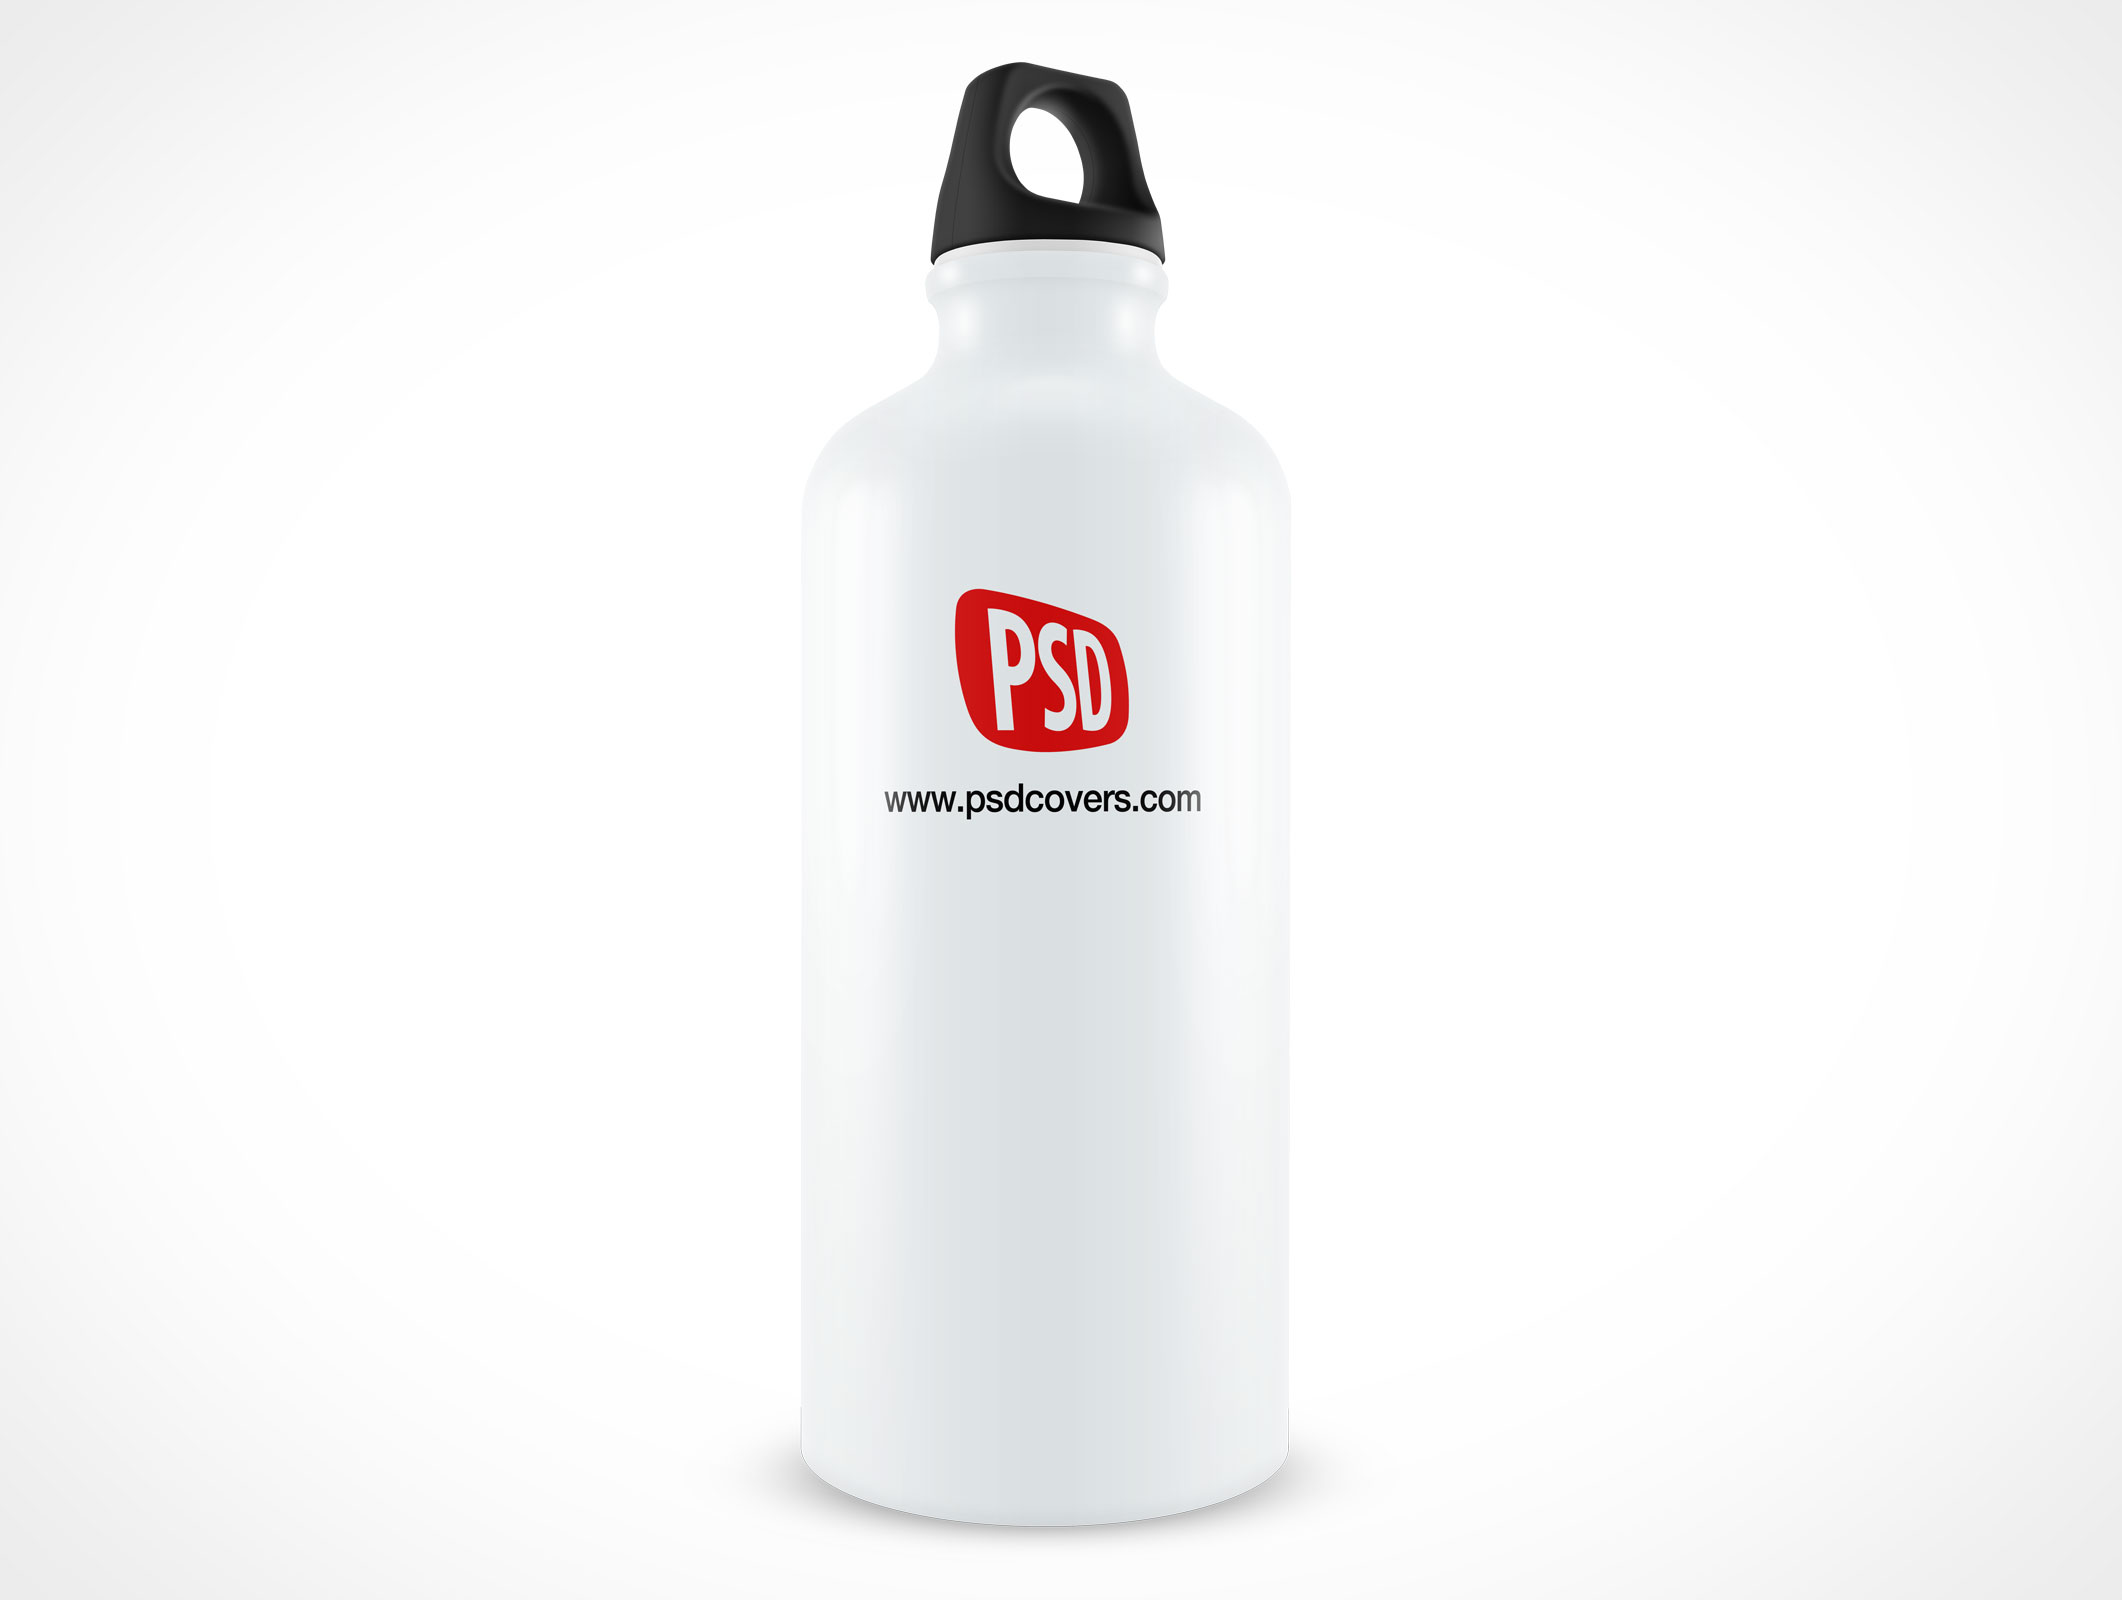 Premium PSD  Plastic water bottle mockup